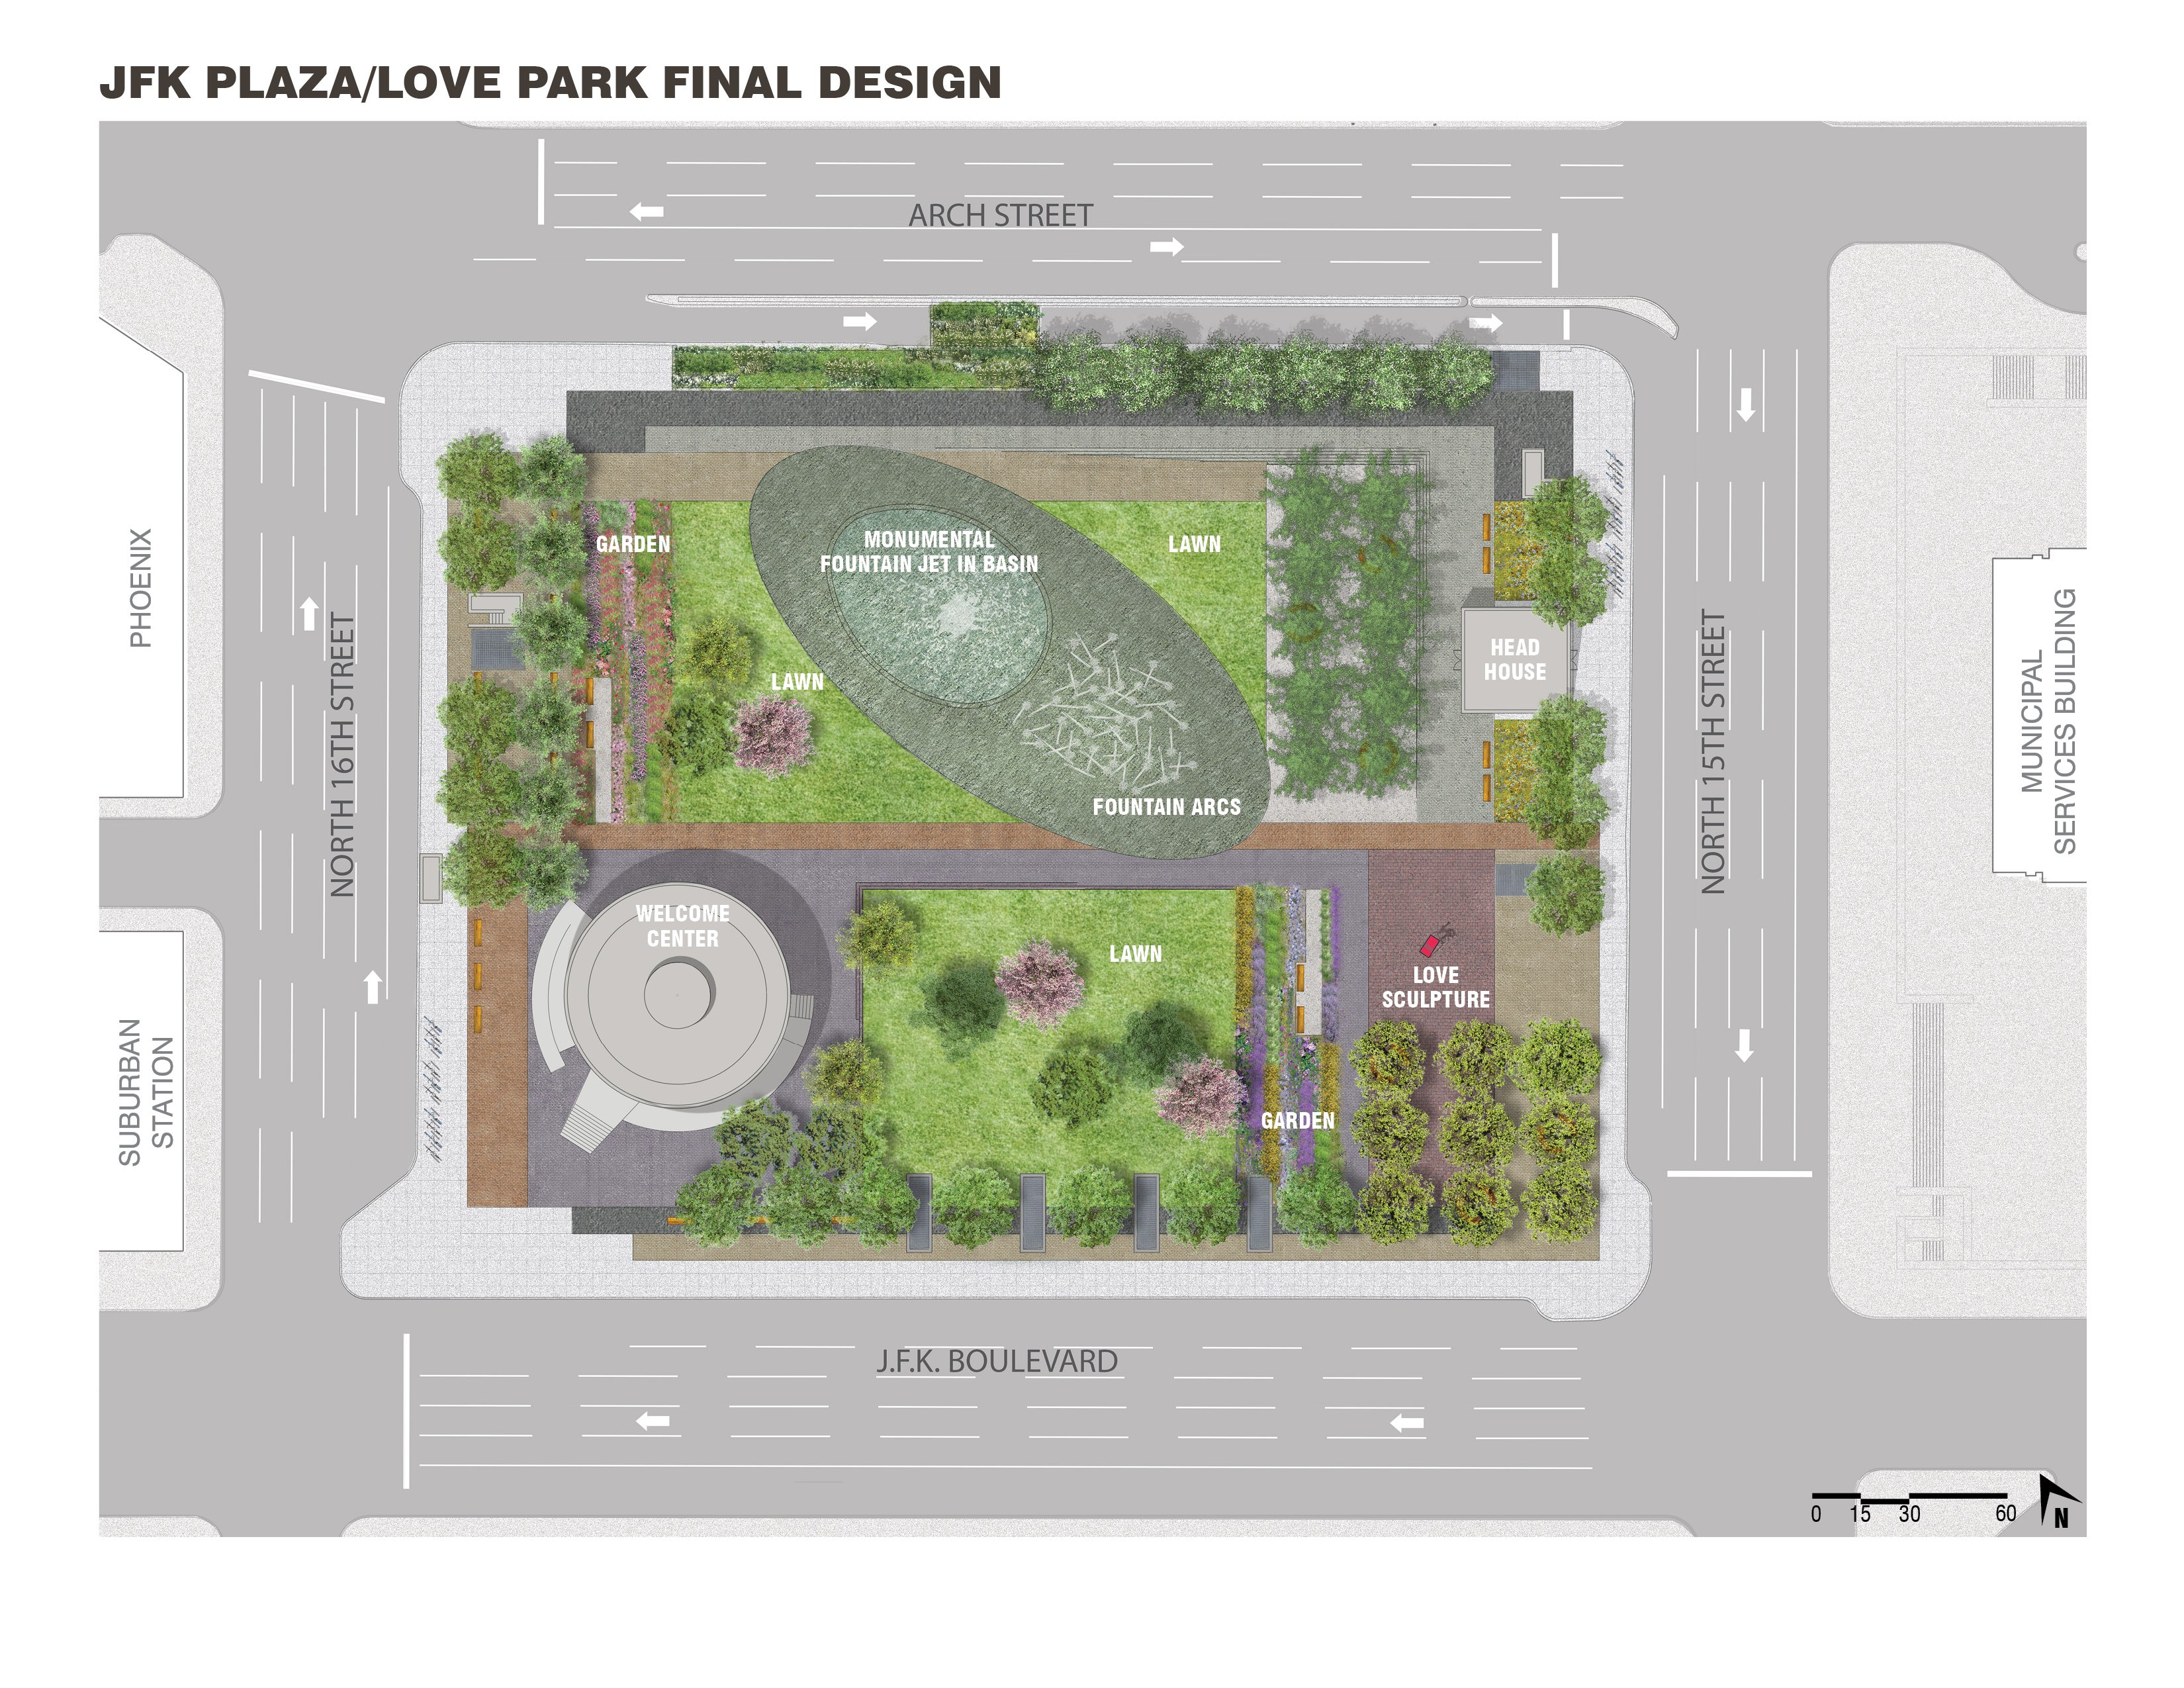 Plan of LOVE Park / JFK Plaza, October 2015 | Hargreaves